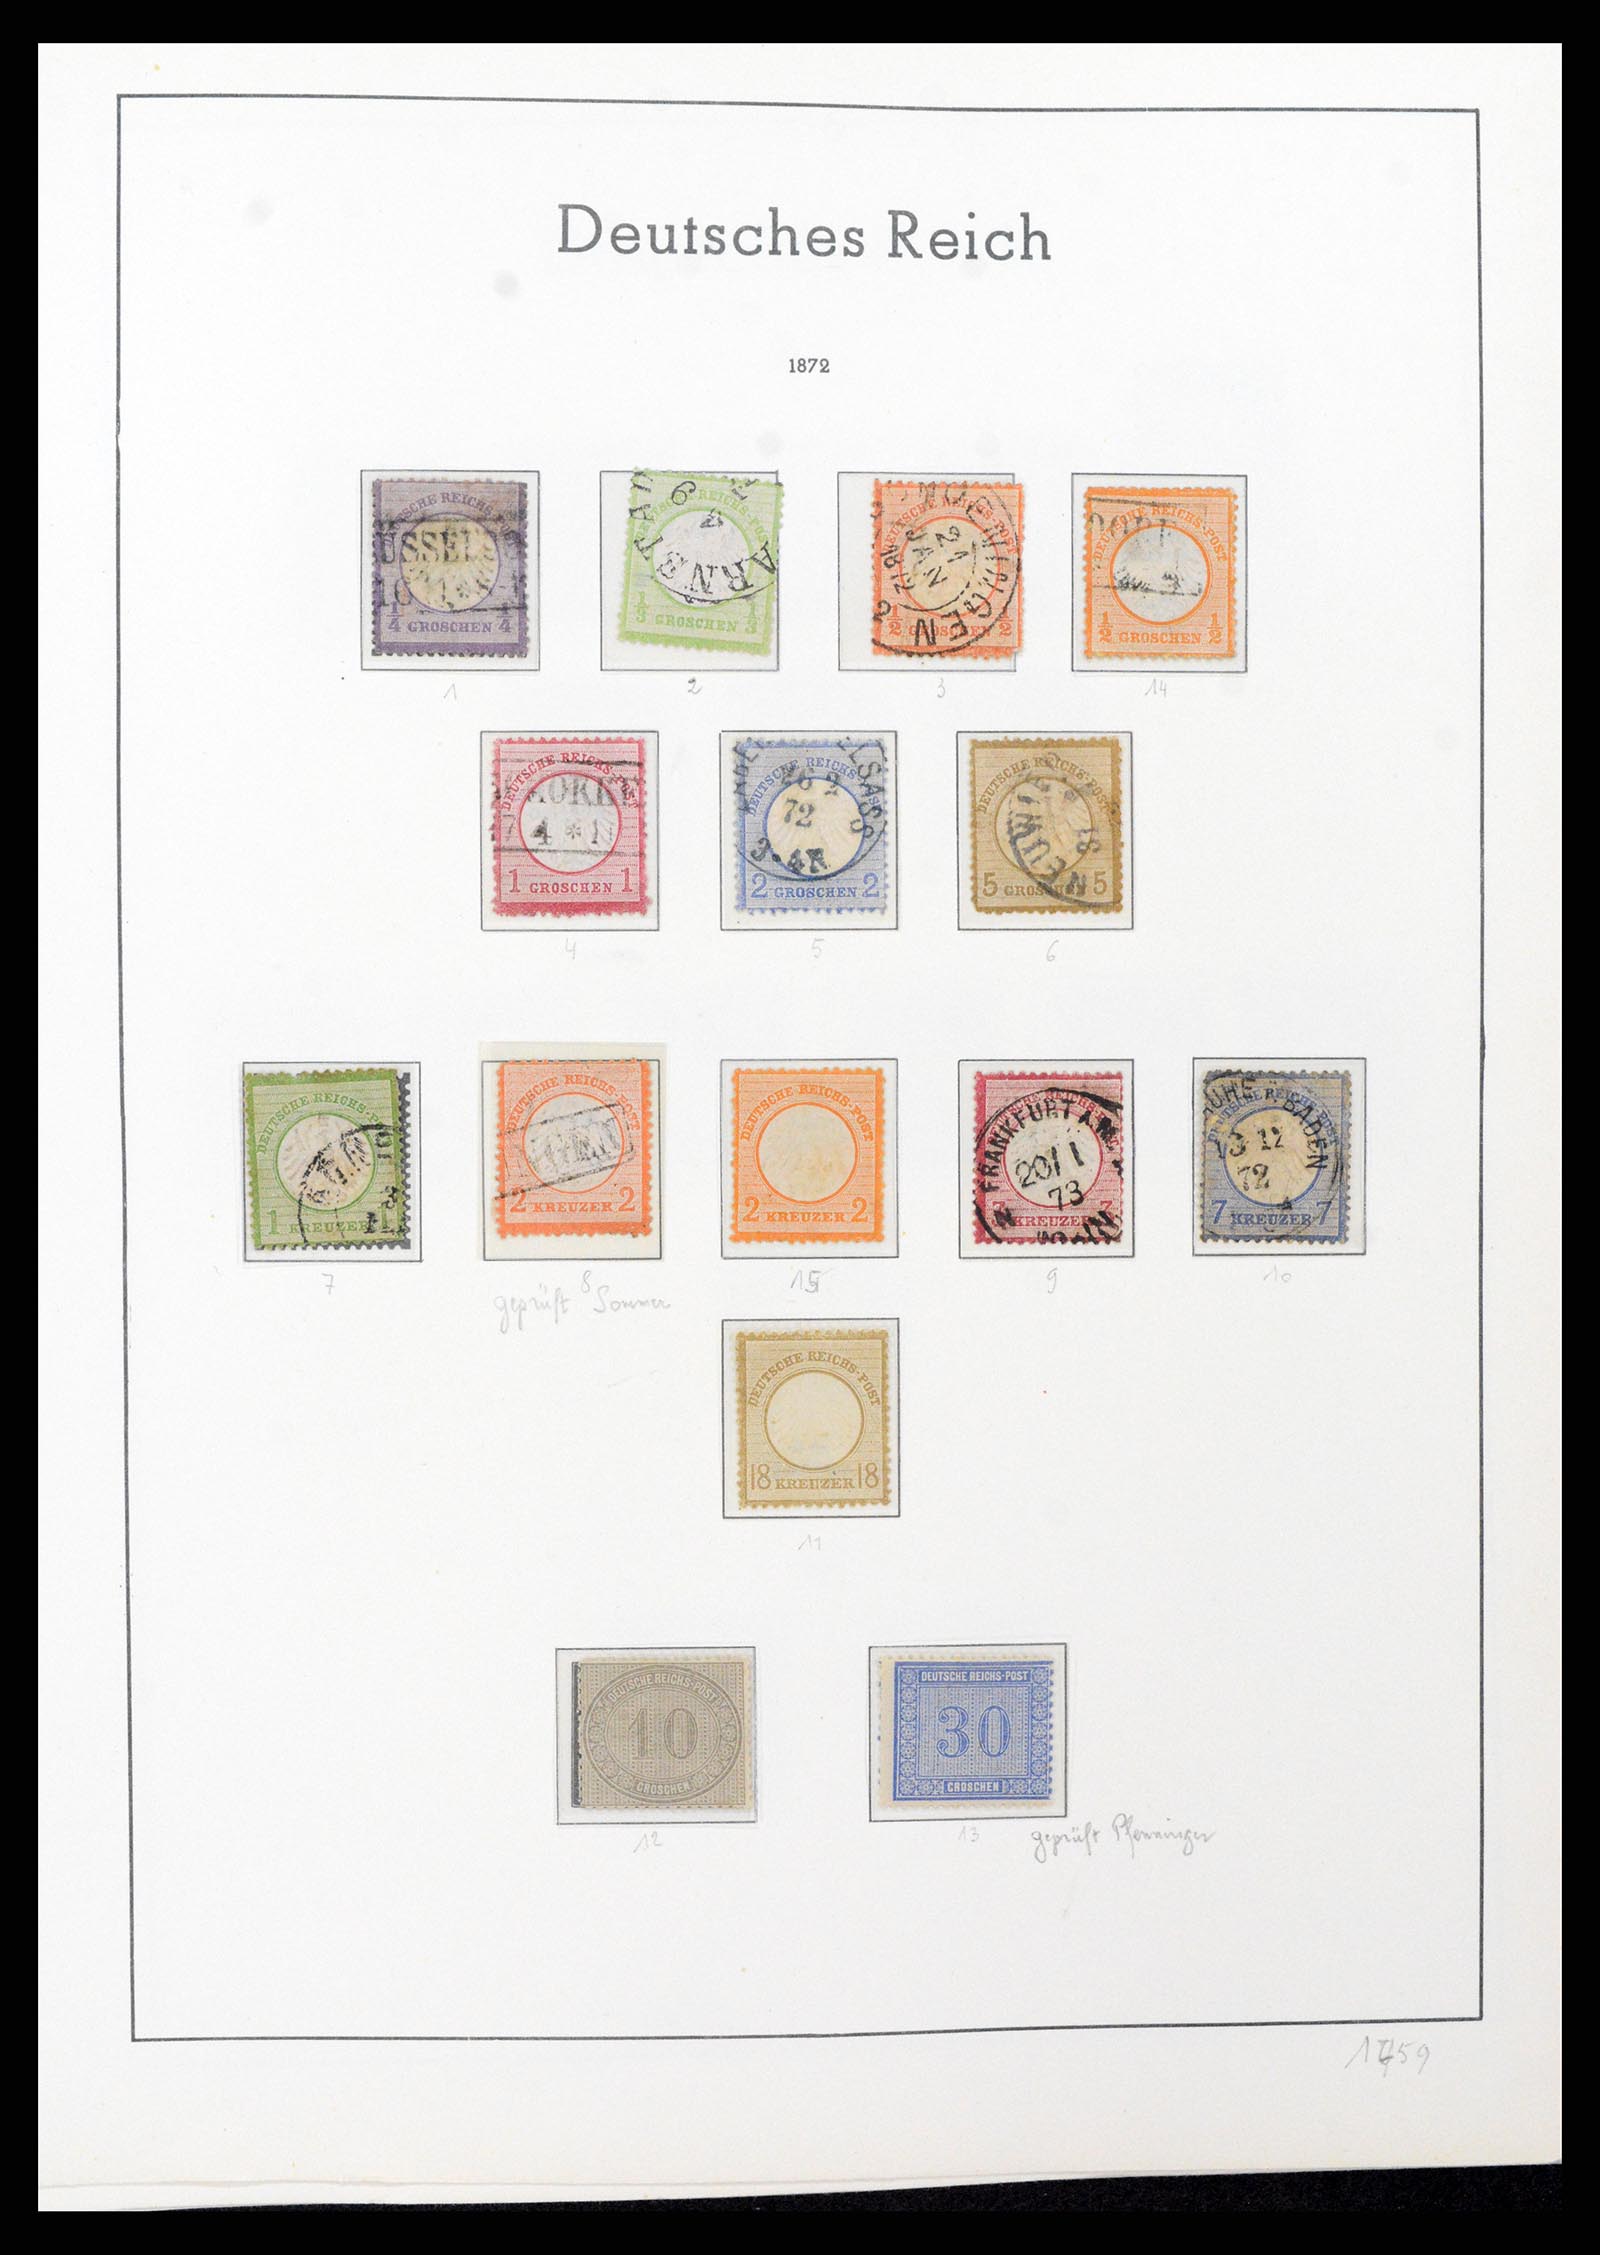 37589 002 - Stamp collection 37589 German Reich 1872-1945.